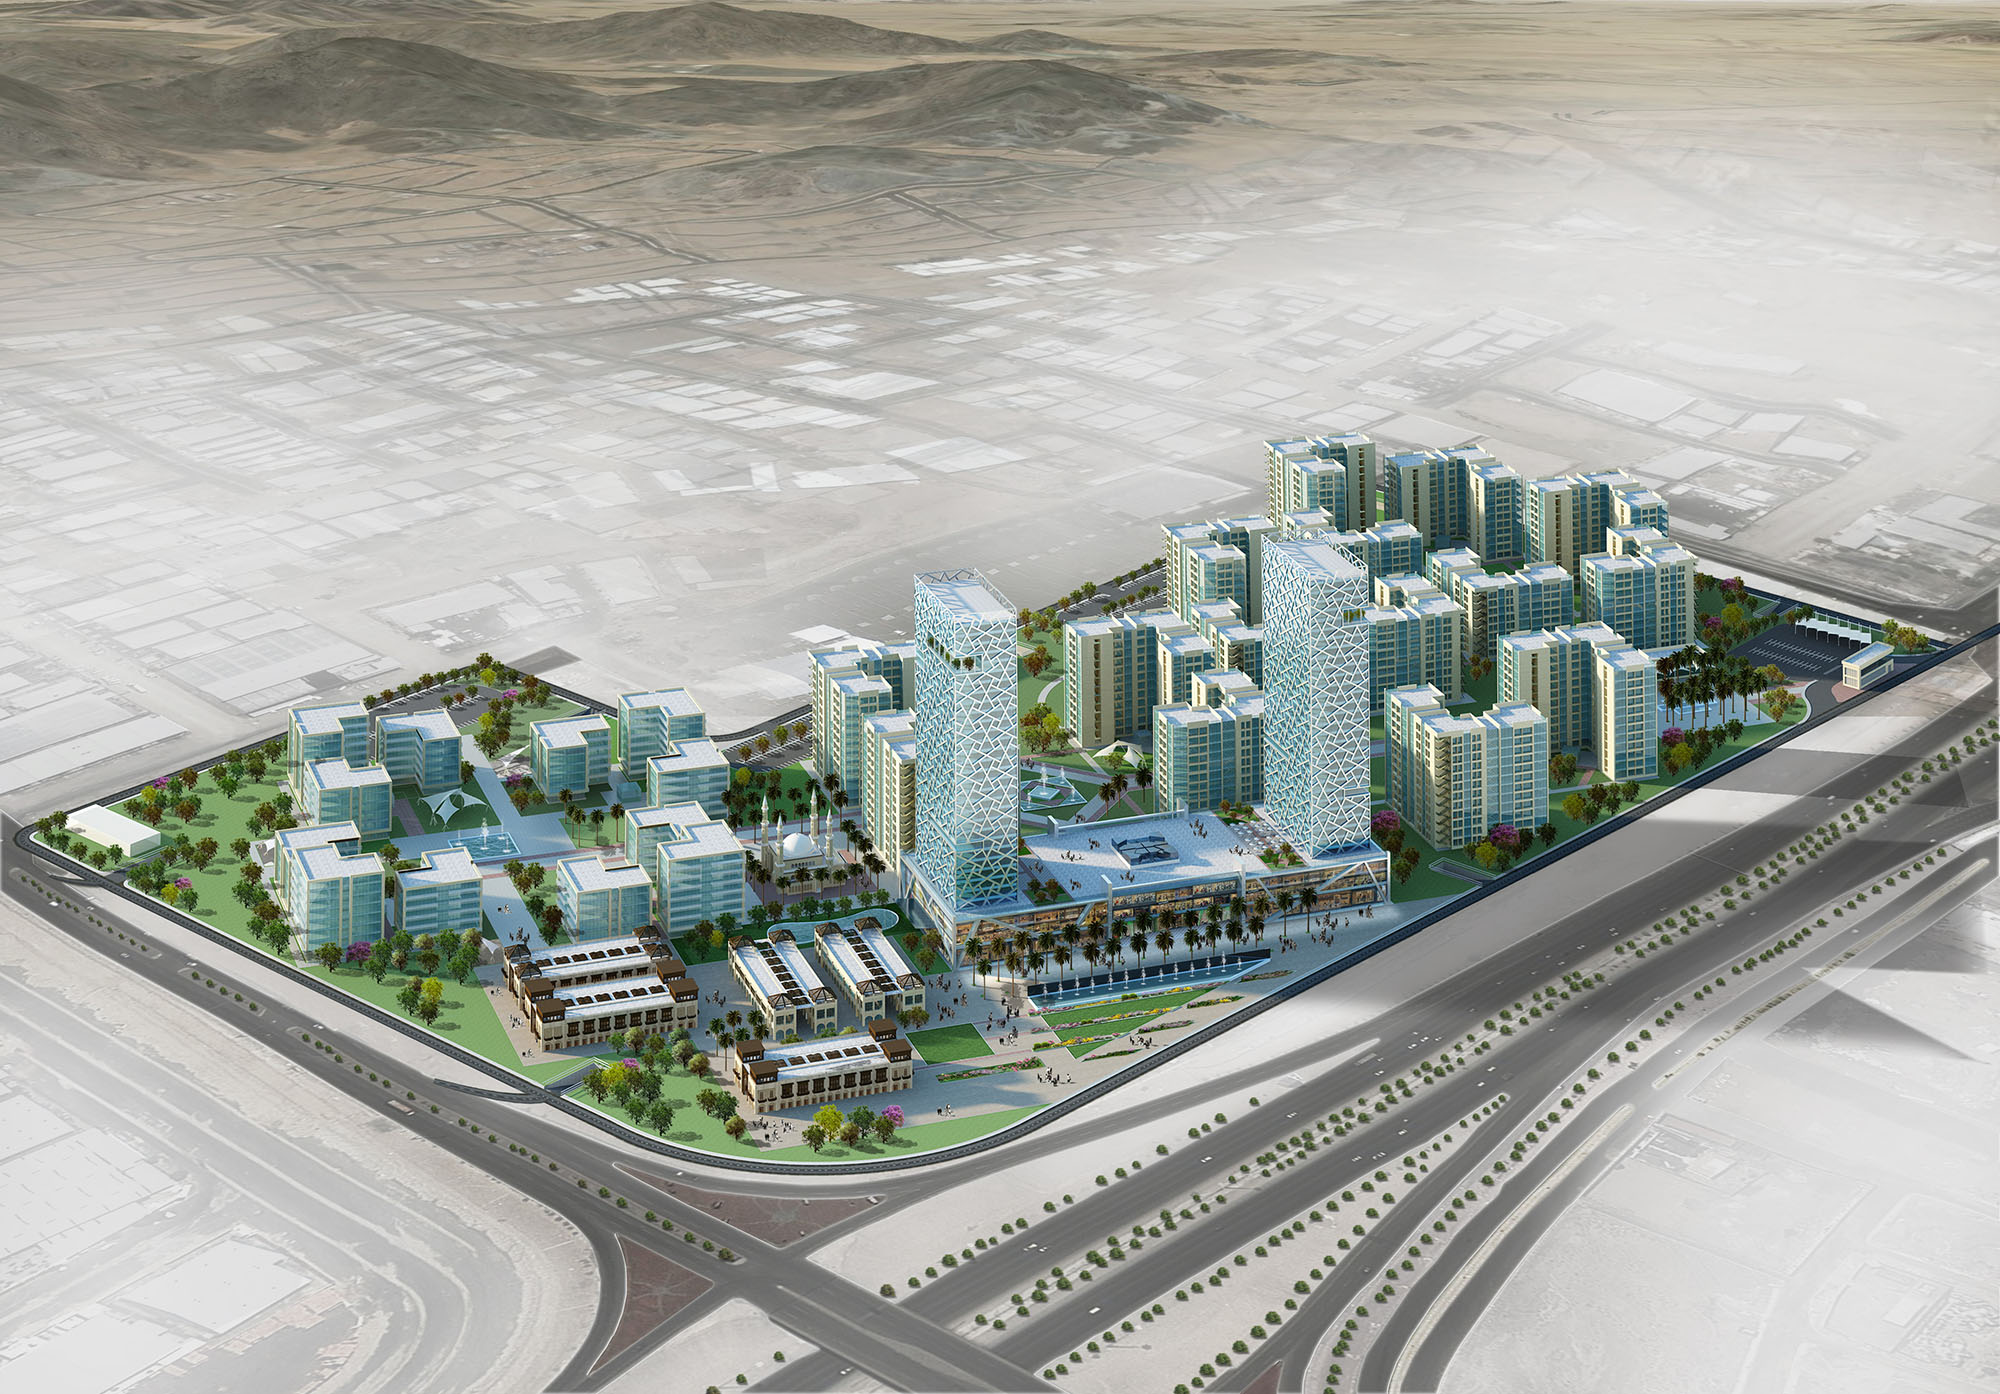 Amir Naif Bin Abdulaziz Al-Saud Residential & Commercial Complex